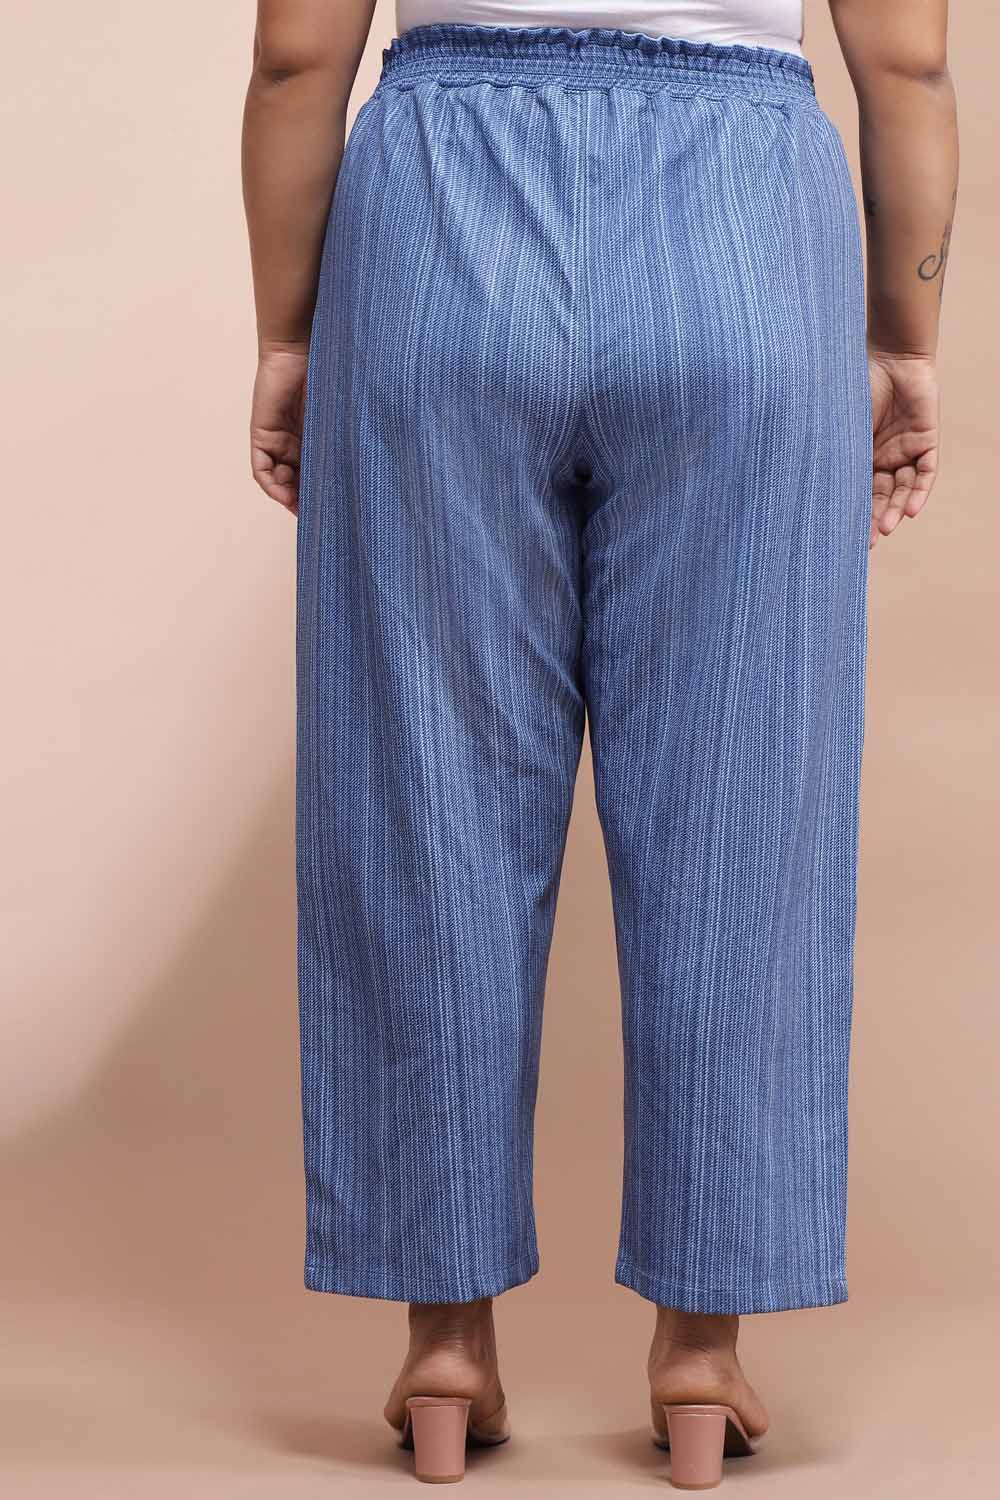 Blue Denim Inspiration Pants